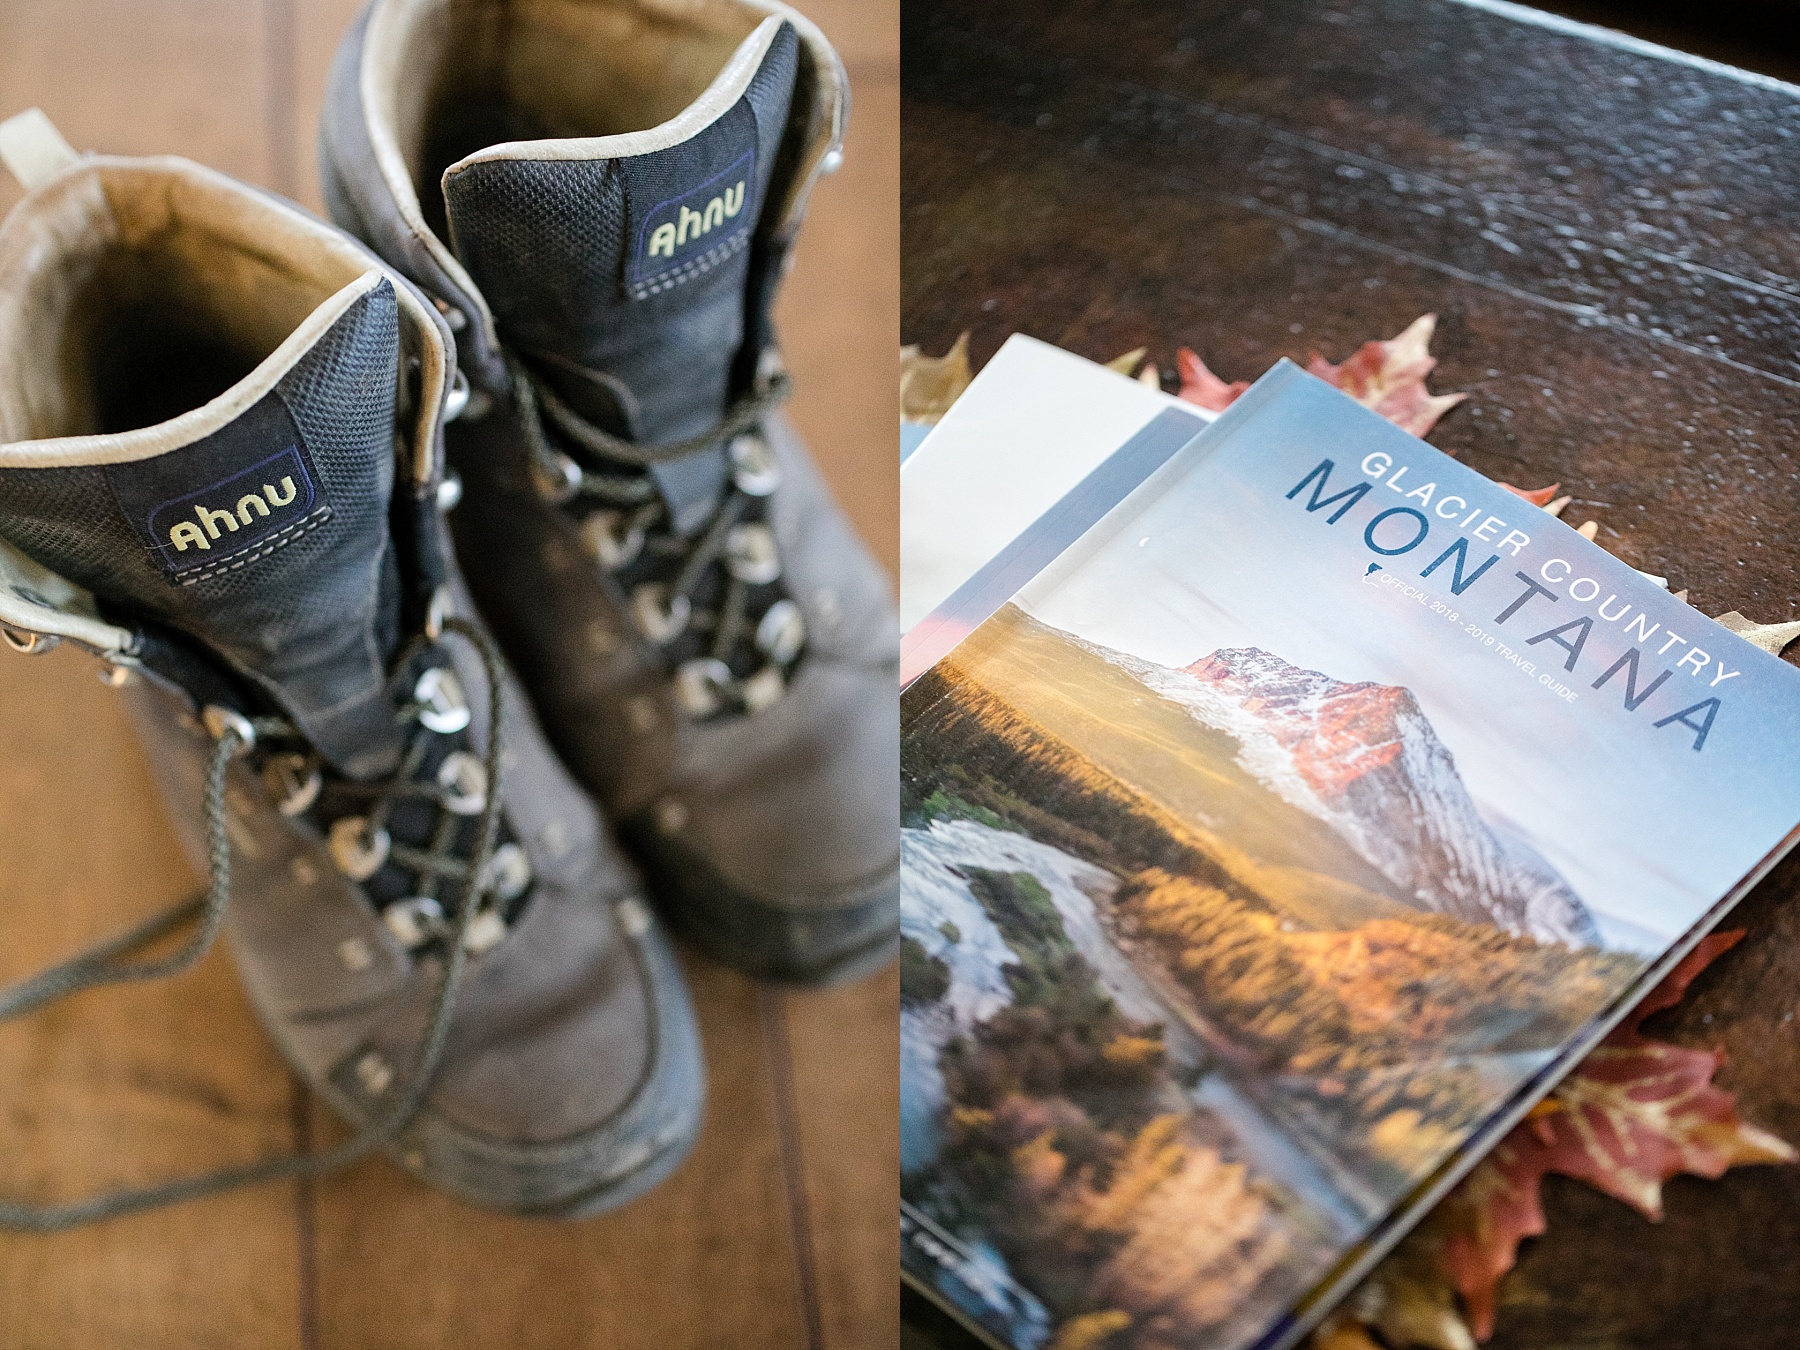 montana tourist book and hiking boots